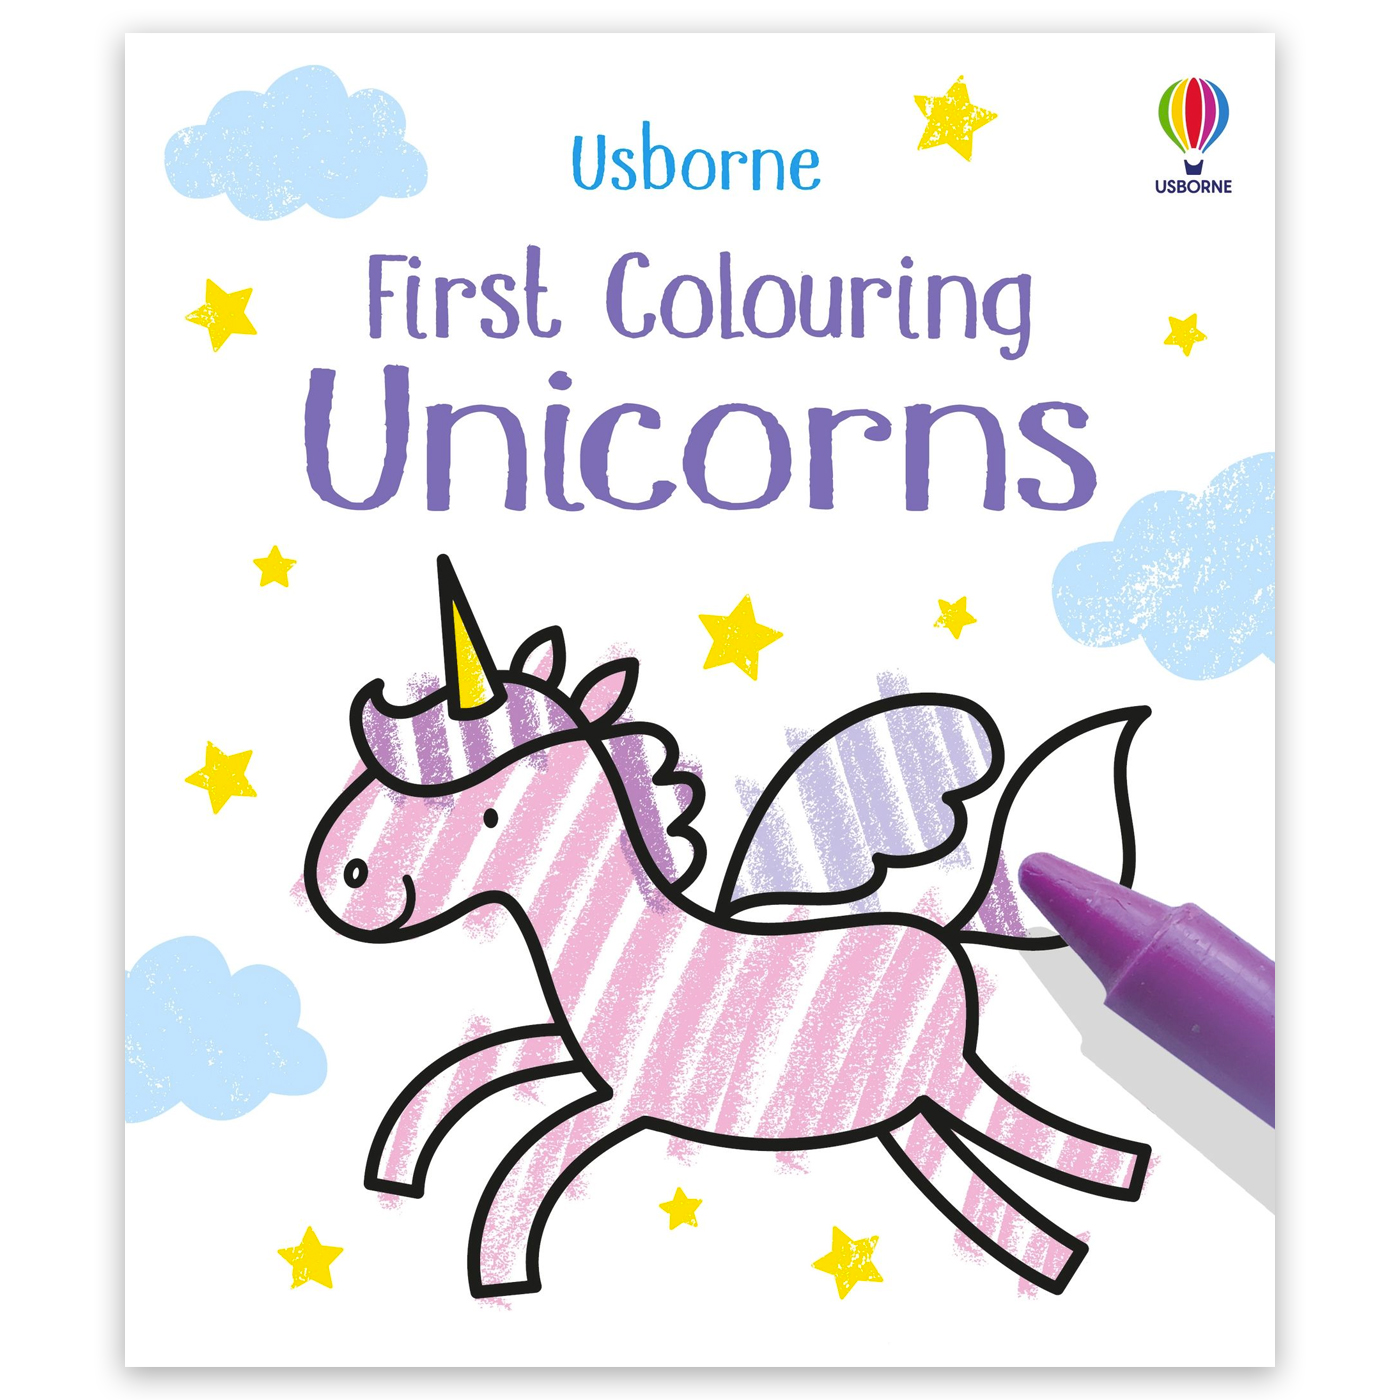 USBORNE First Colouring Unicorns